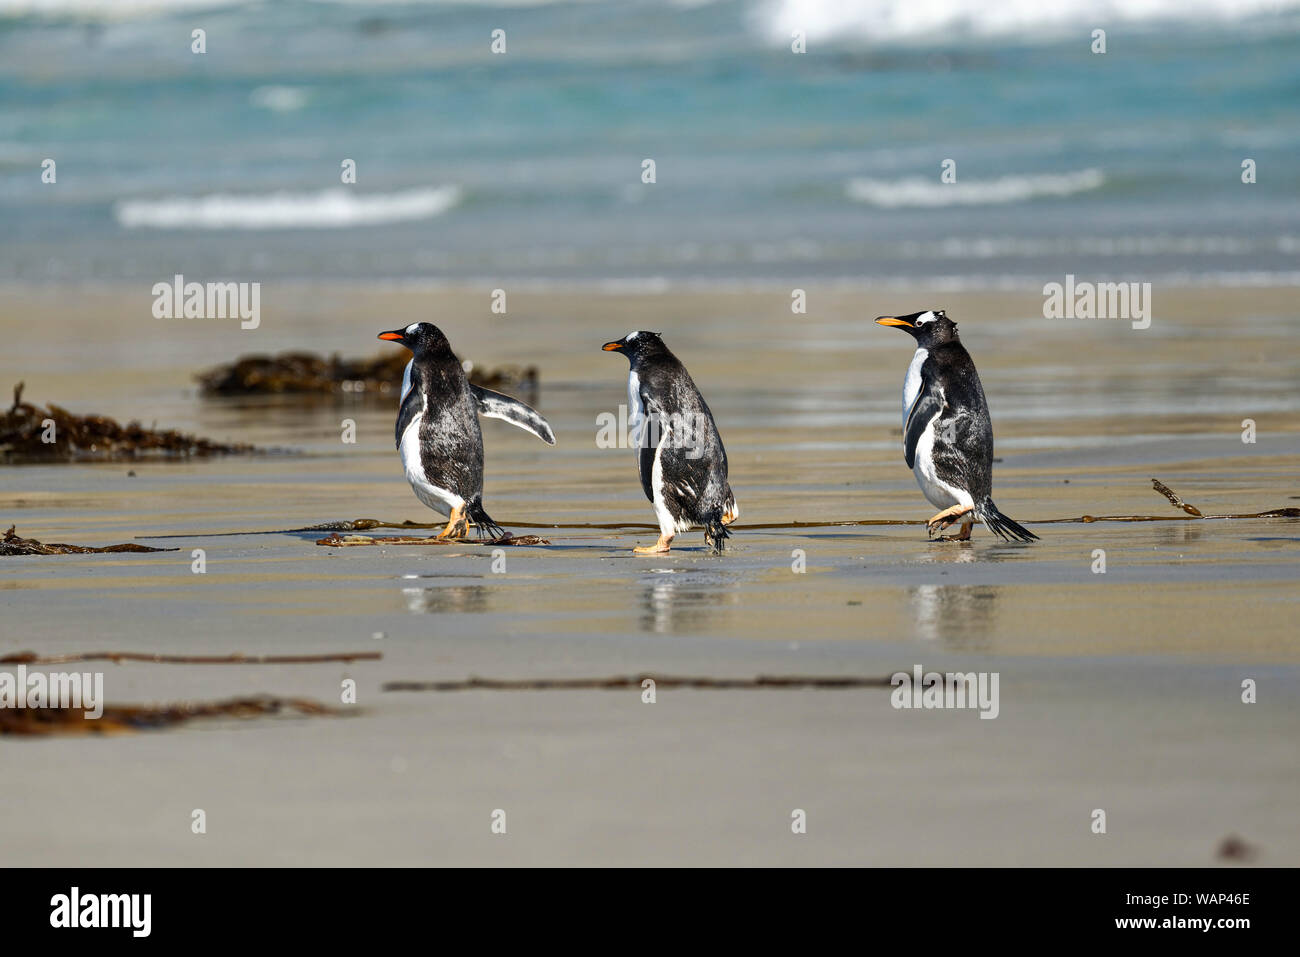 Drei Eselspinguine (Pygoscelis papua) laufen am Strand, Falkland Inseln. Drei Gentoo Penguins zu Fuß am Strand, Falkland Inseln Stockfoto